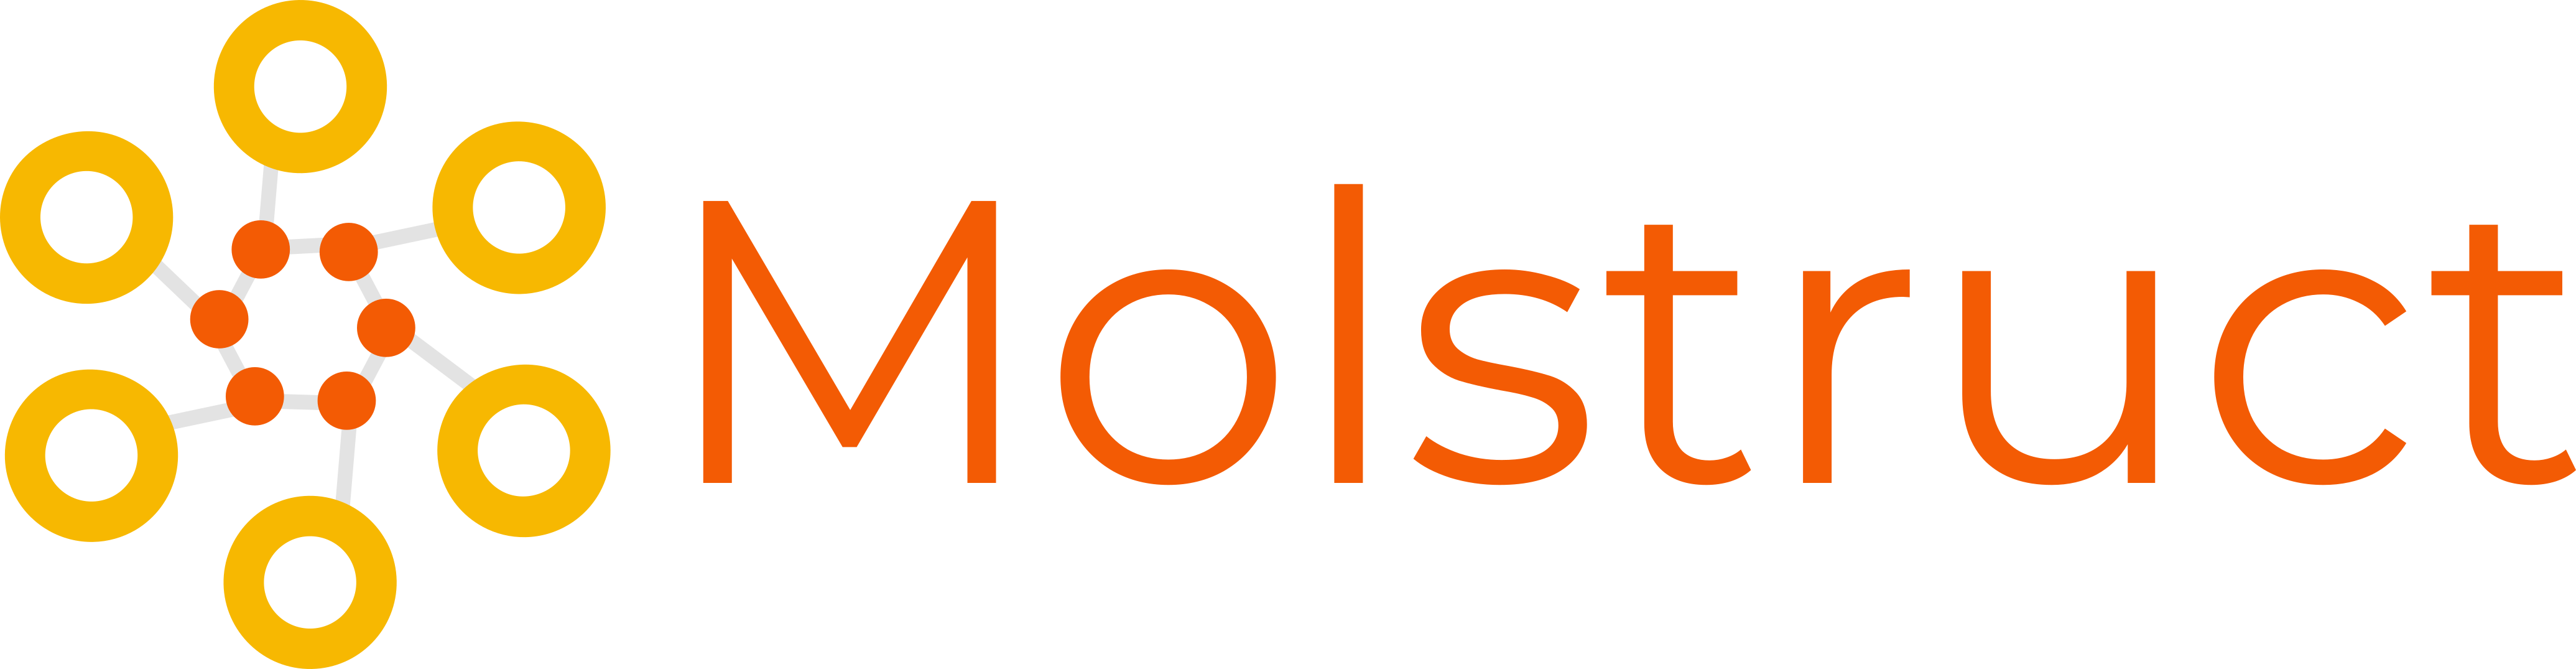 Molstruct logo